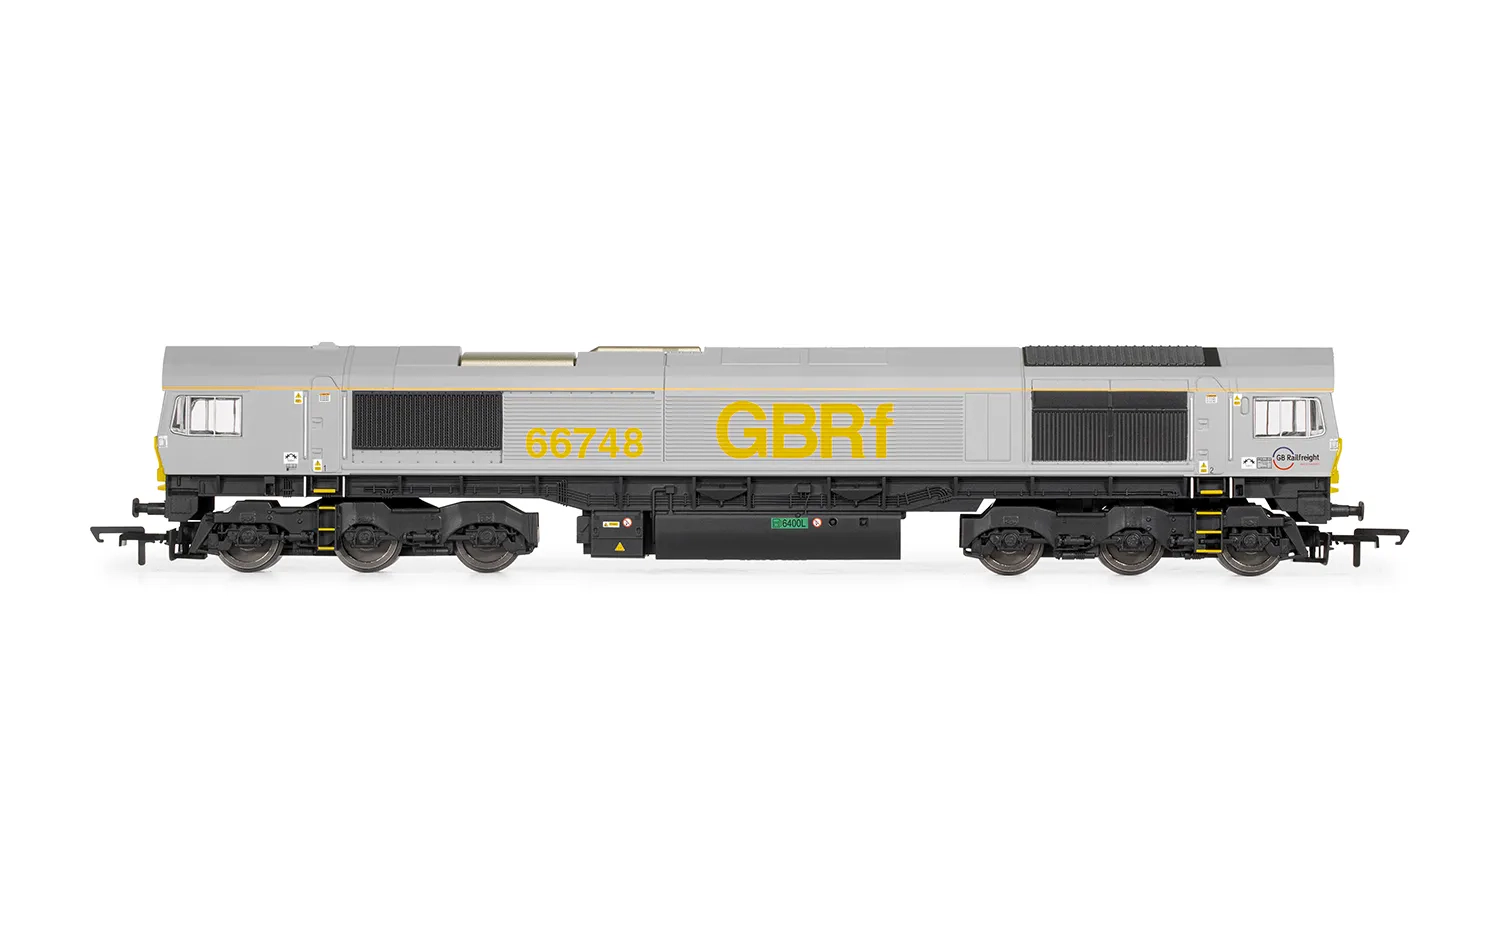 GBRf, Class 66, Co-Co, 66748 - Era 10